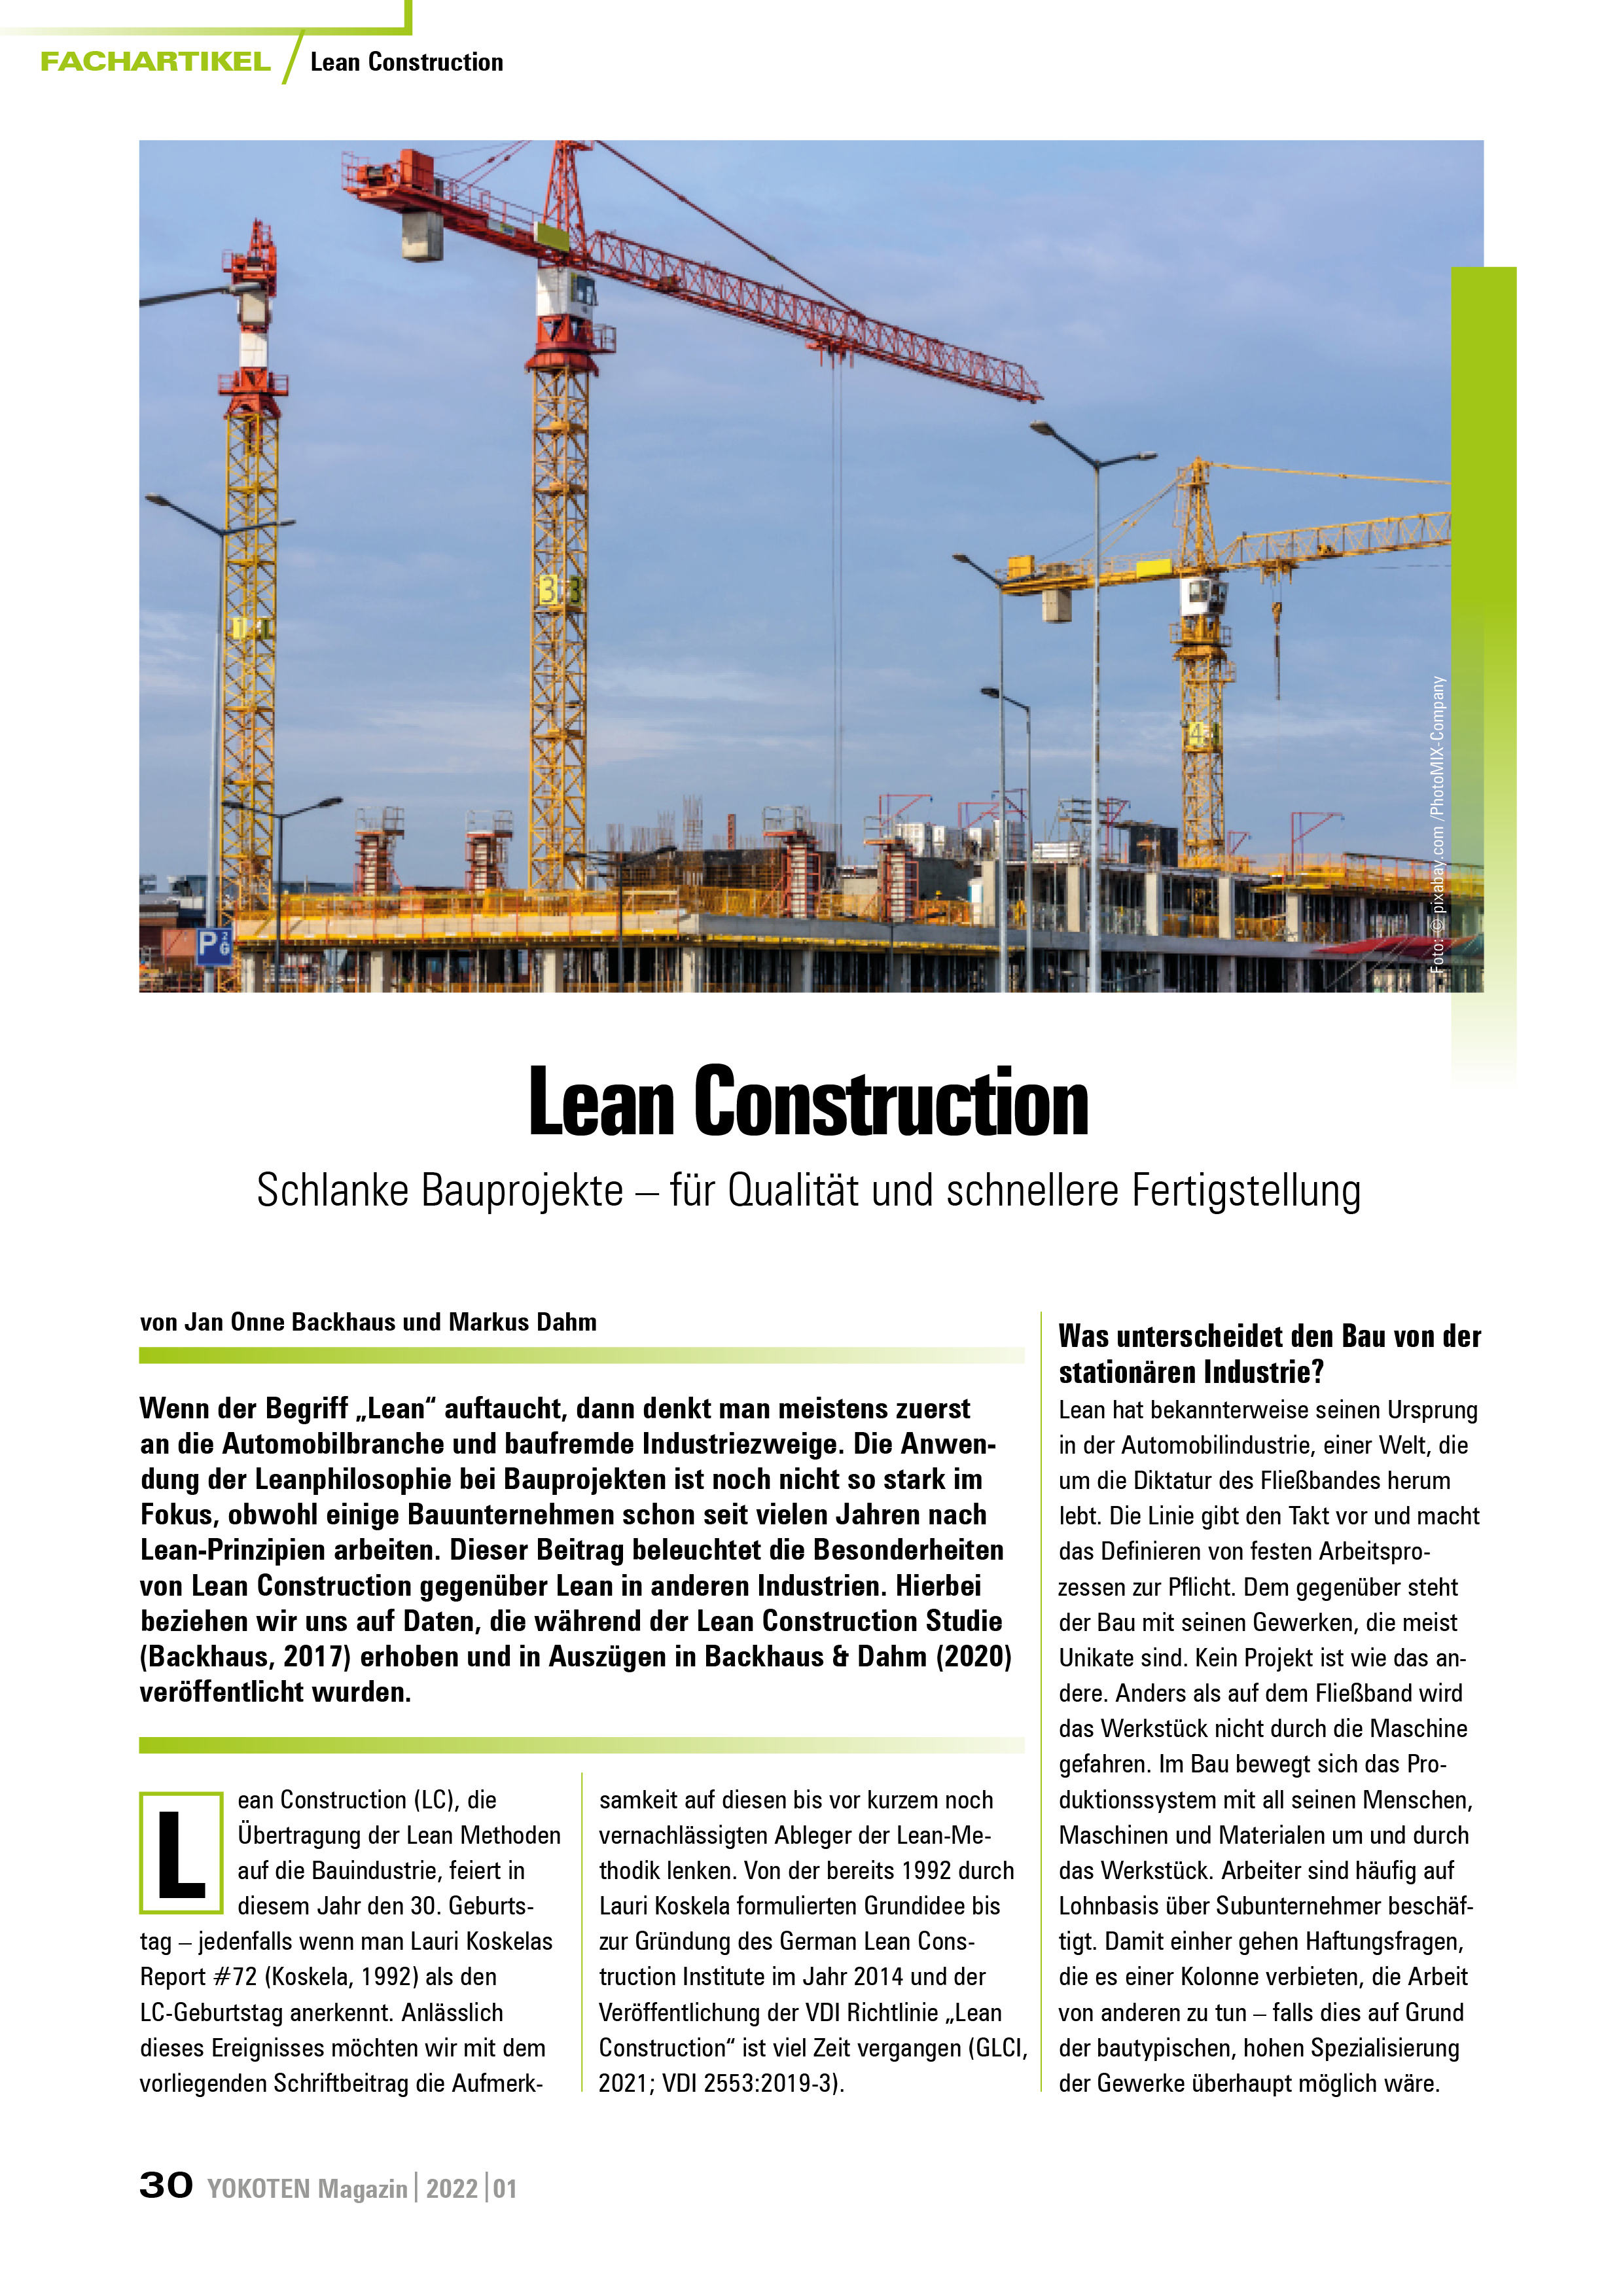 Lean Construction - Artikel aus Fachmagazin YOKOTEN 2022-01